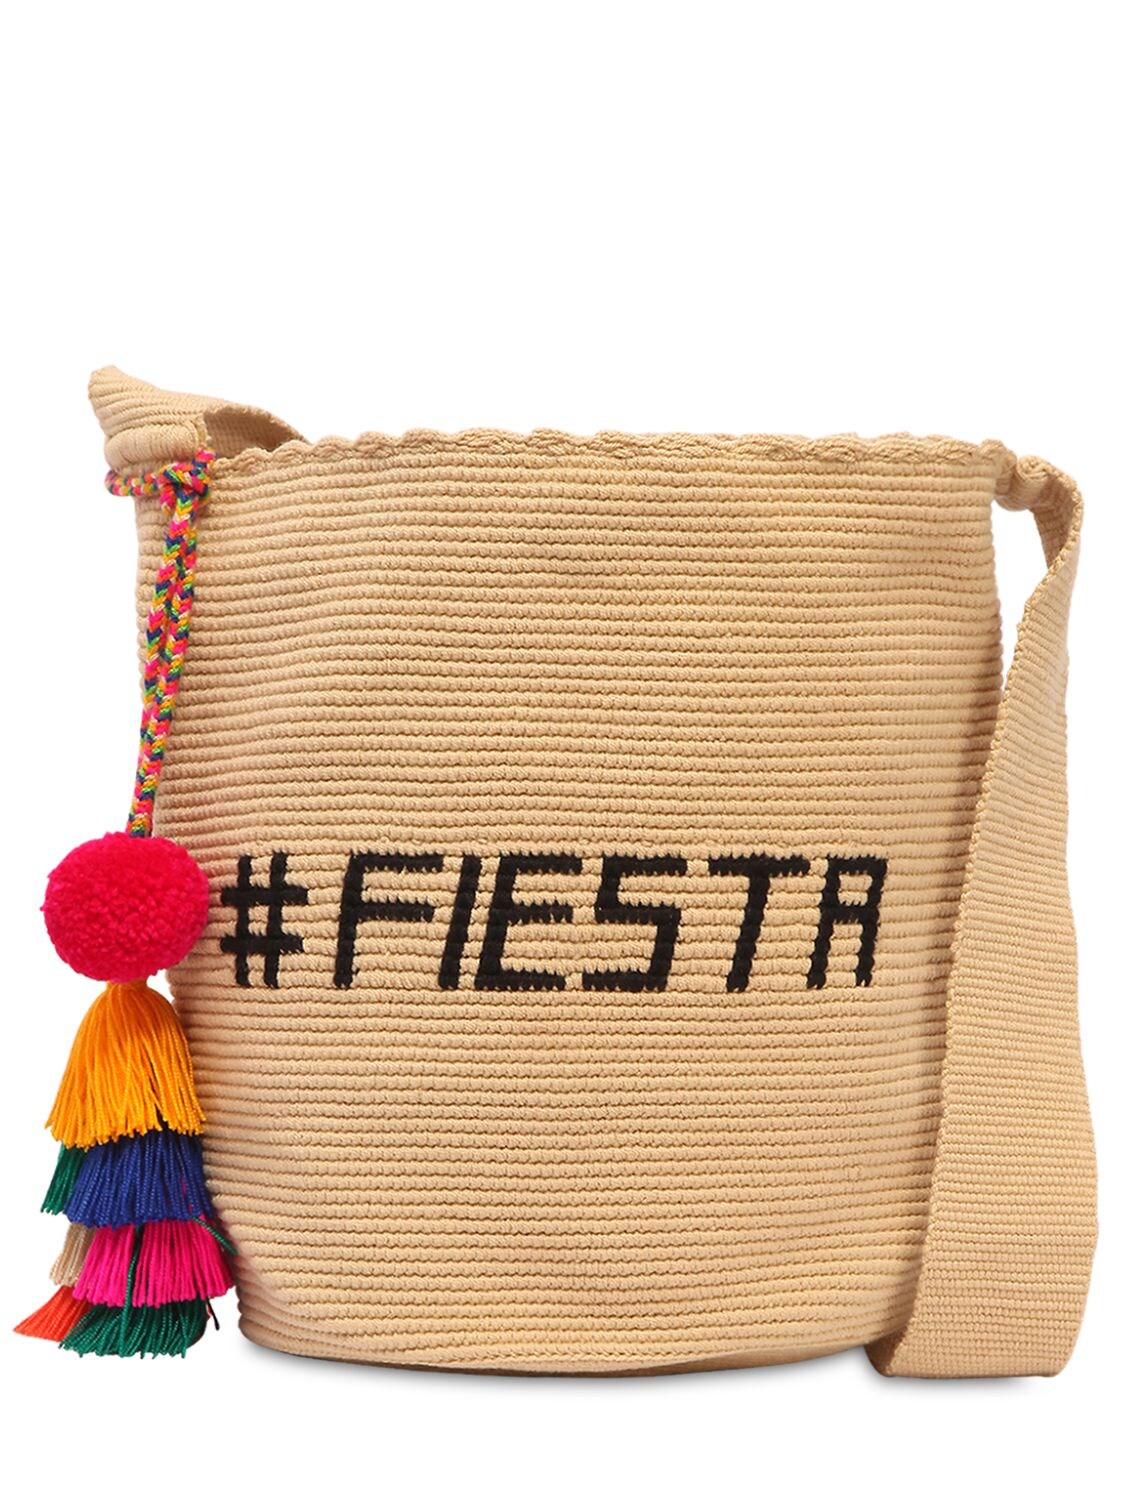 Soraya Hennessy Fiesta Mochila Woven Bucket Bag In Natural